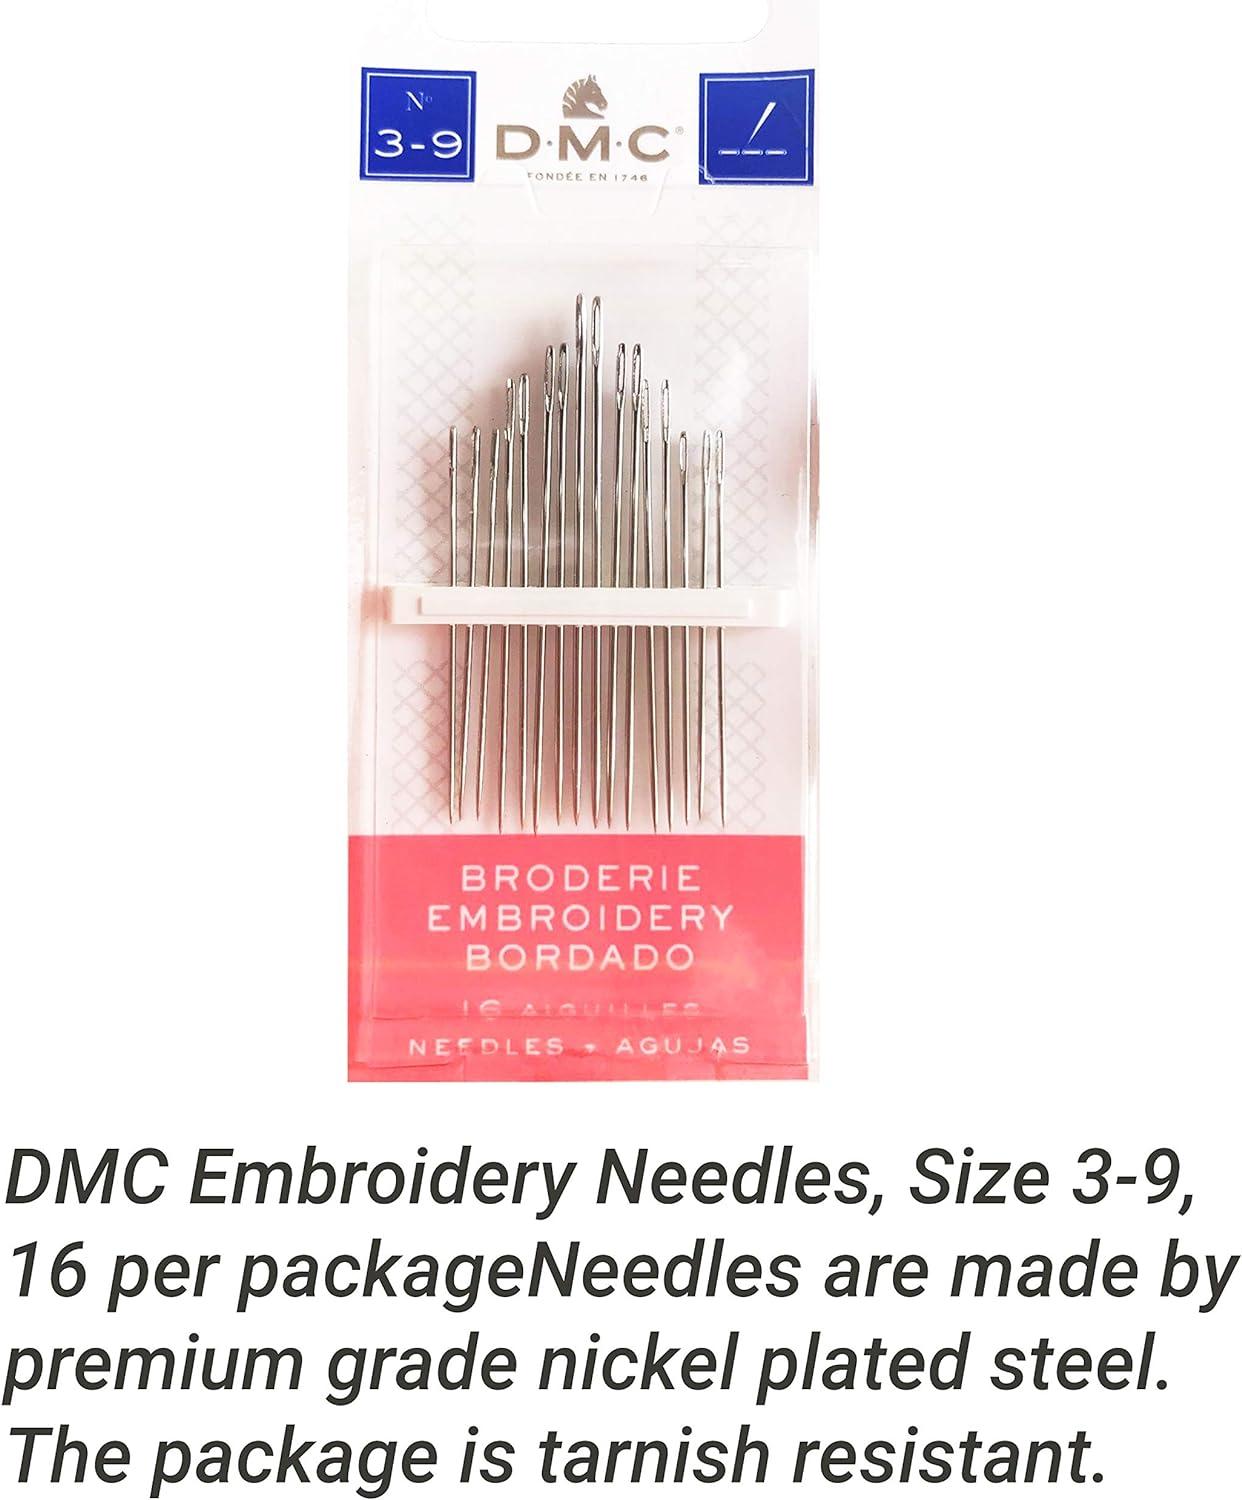  DMC Black Embroidery Floss ,6 Strand Cotton, Black  Thread,12/Pack Bundle with1Skein of Each DMC Black Brown and DMC Black  Avocado with a Set of DMC Cross Stitch Needles, Black Premium String/Yarn 